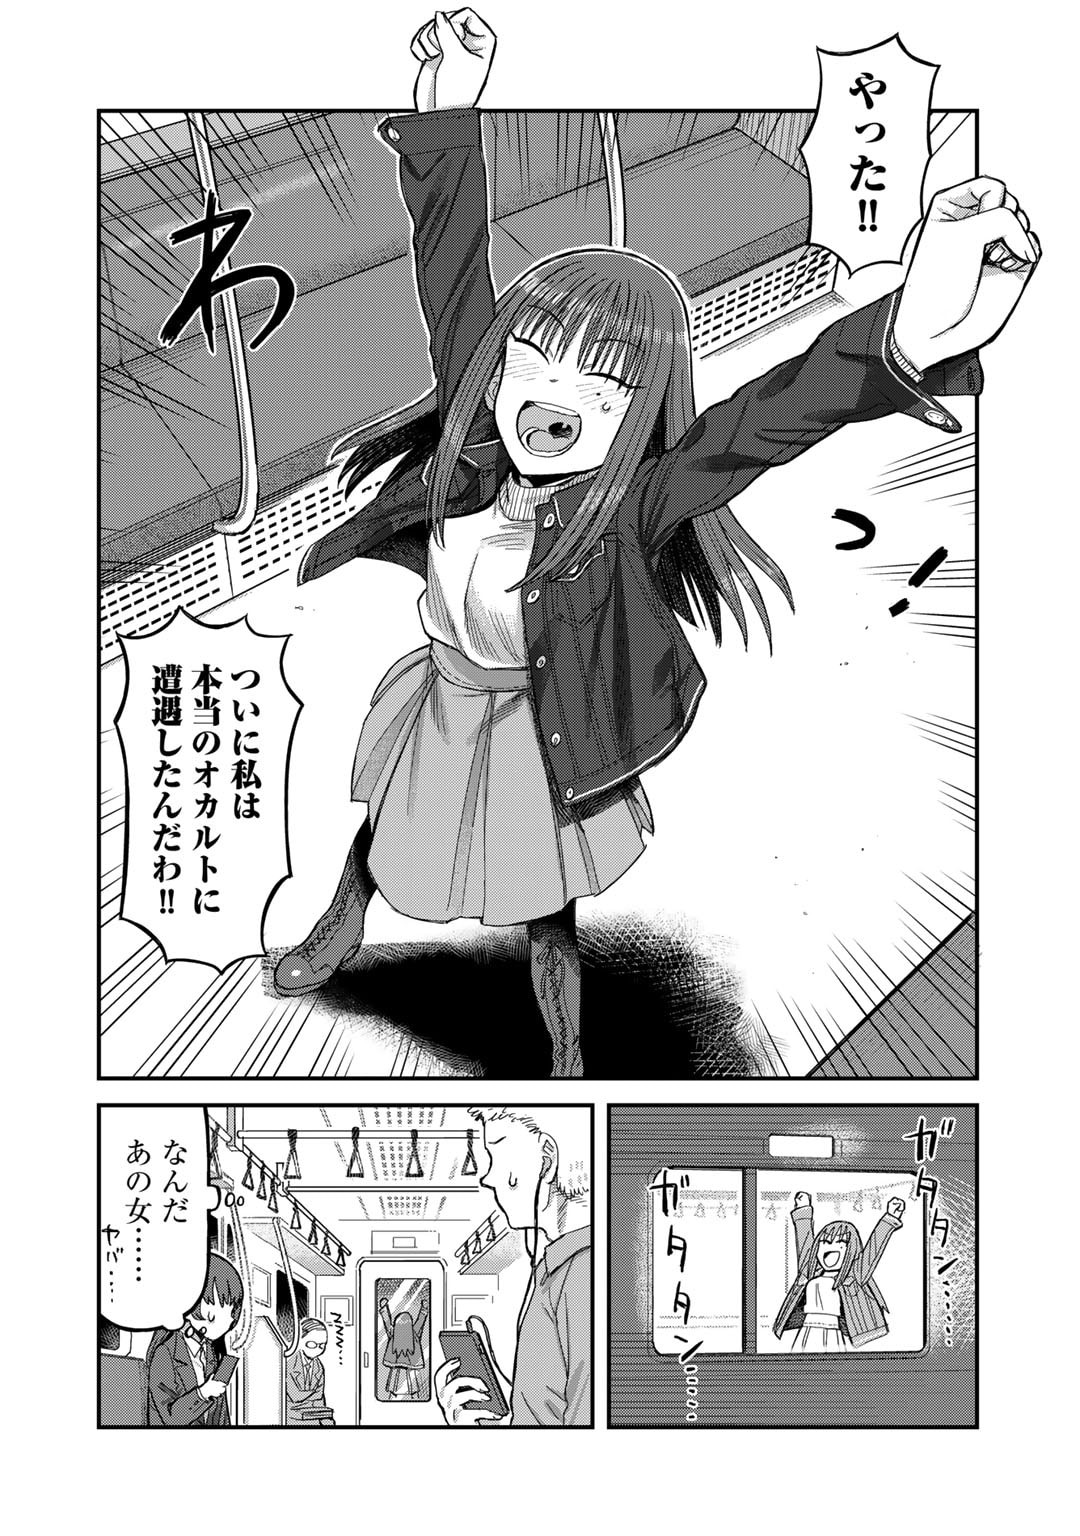 Kurono-san wa Occult ga Suki! - Chapter 4 - Page 12